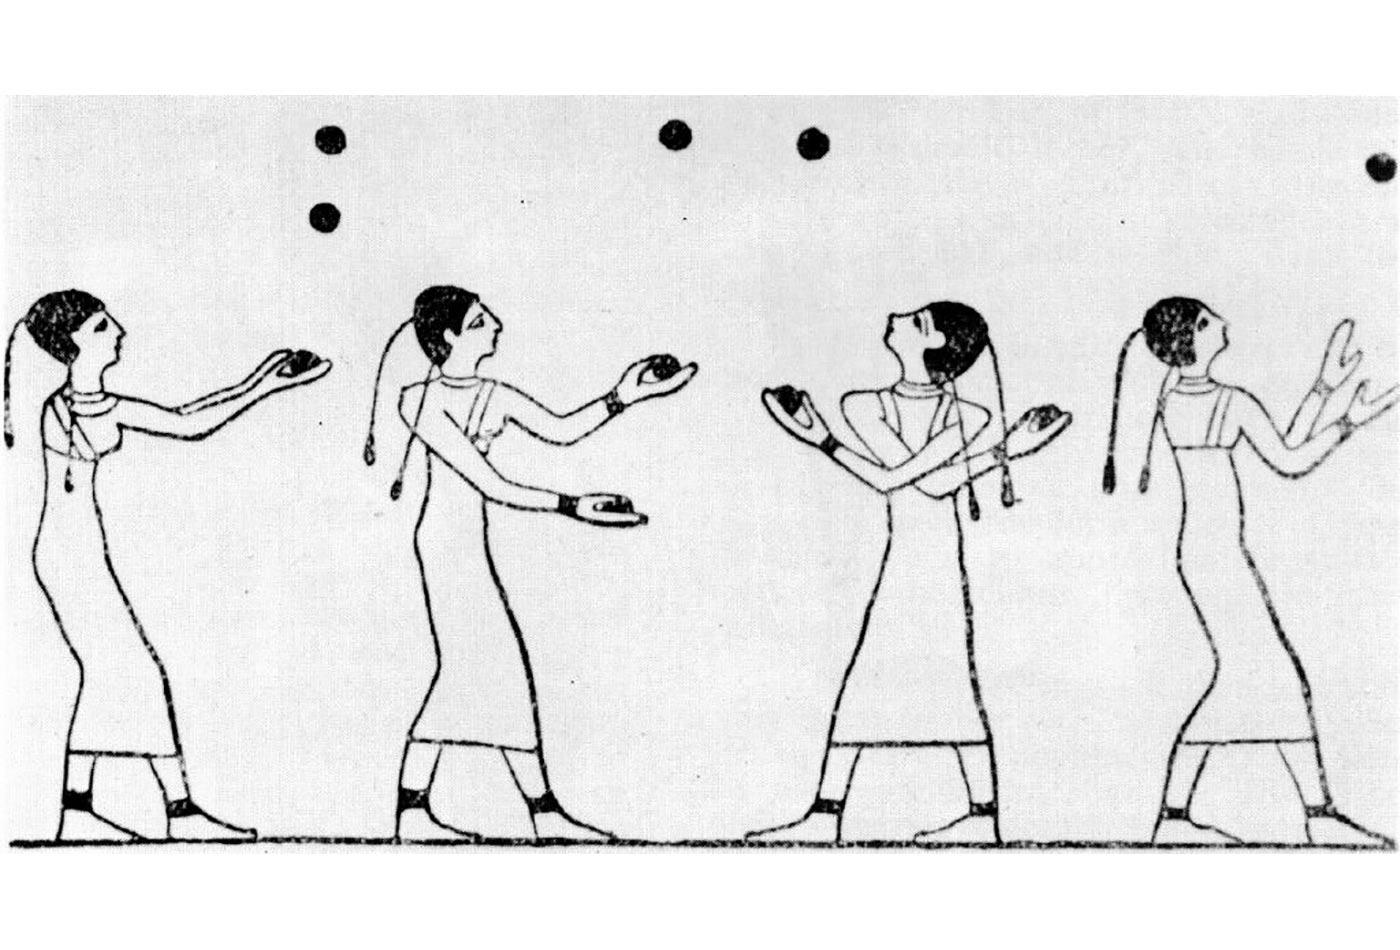 Early Egyptian juggling art